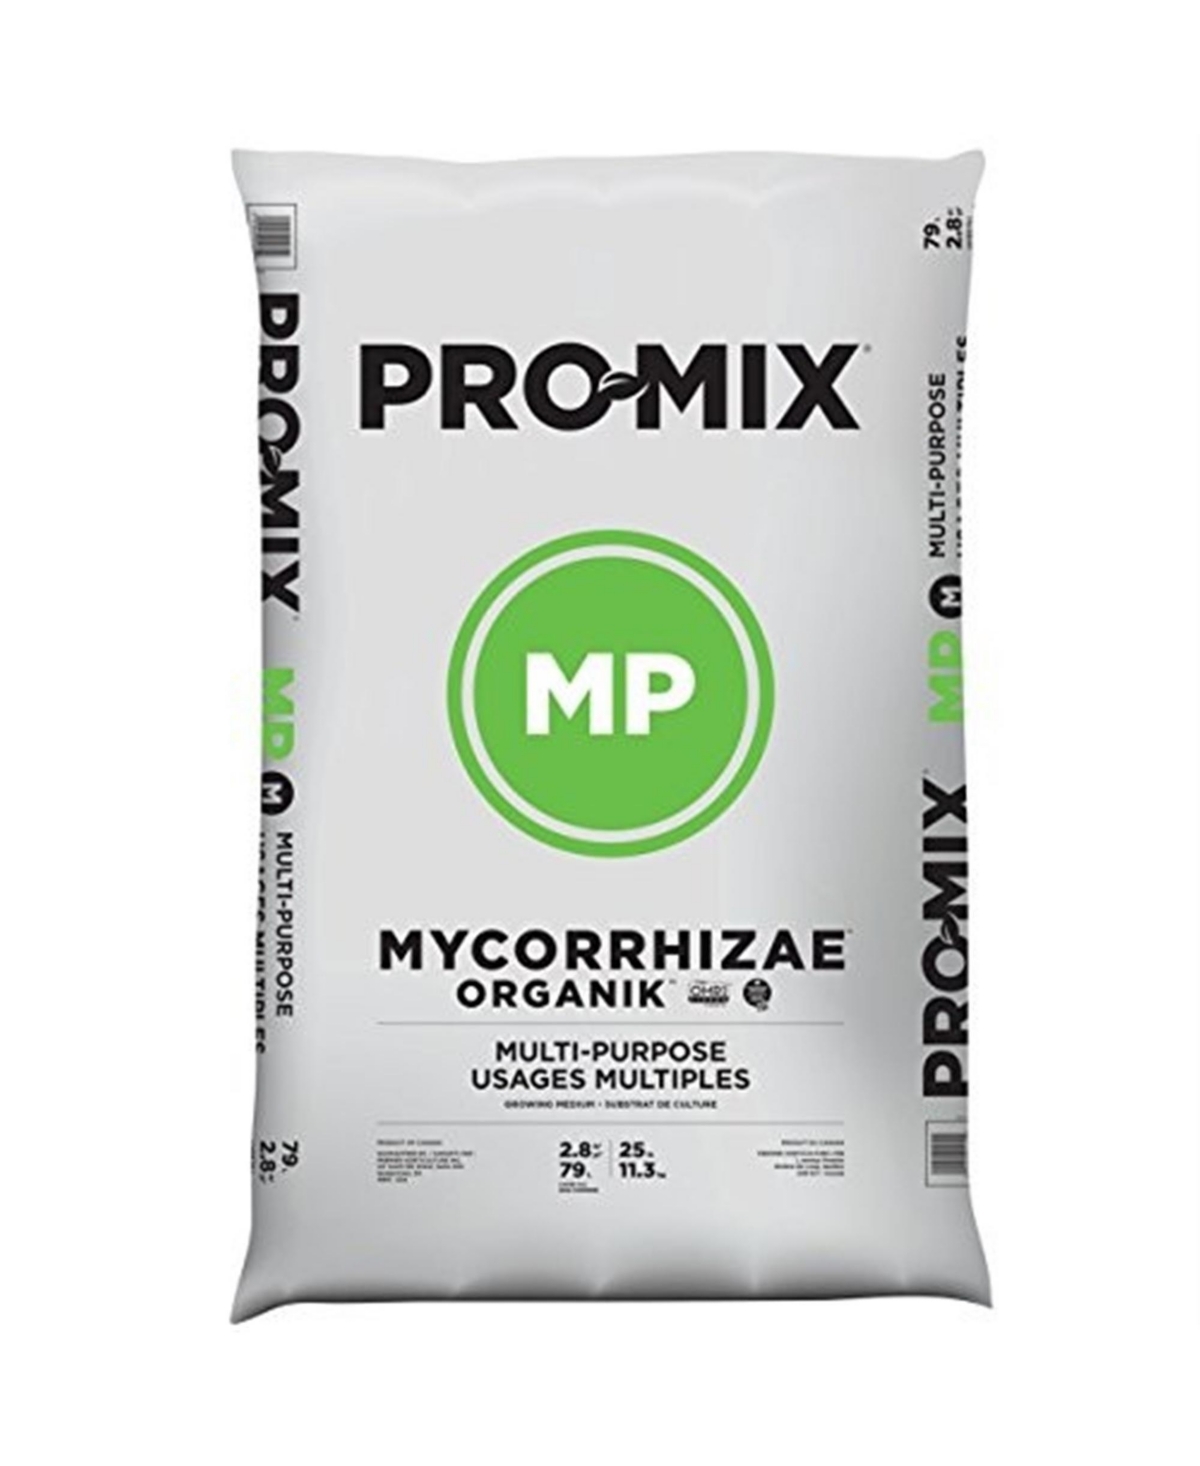 Pro-mix Mp Organik Mycorrhizae Grow Mix, 2.8CF - Multicolored